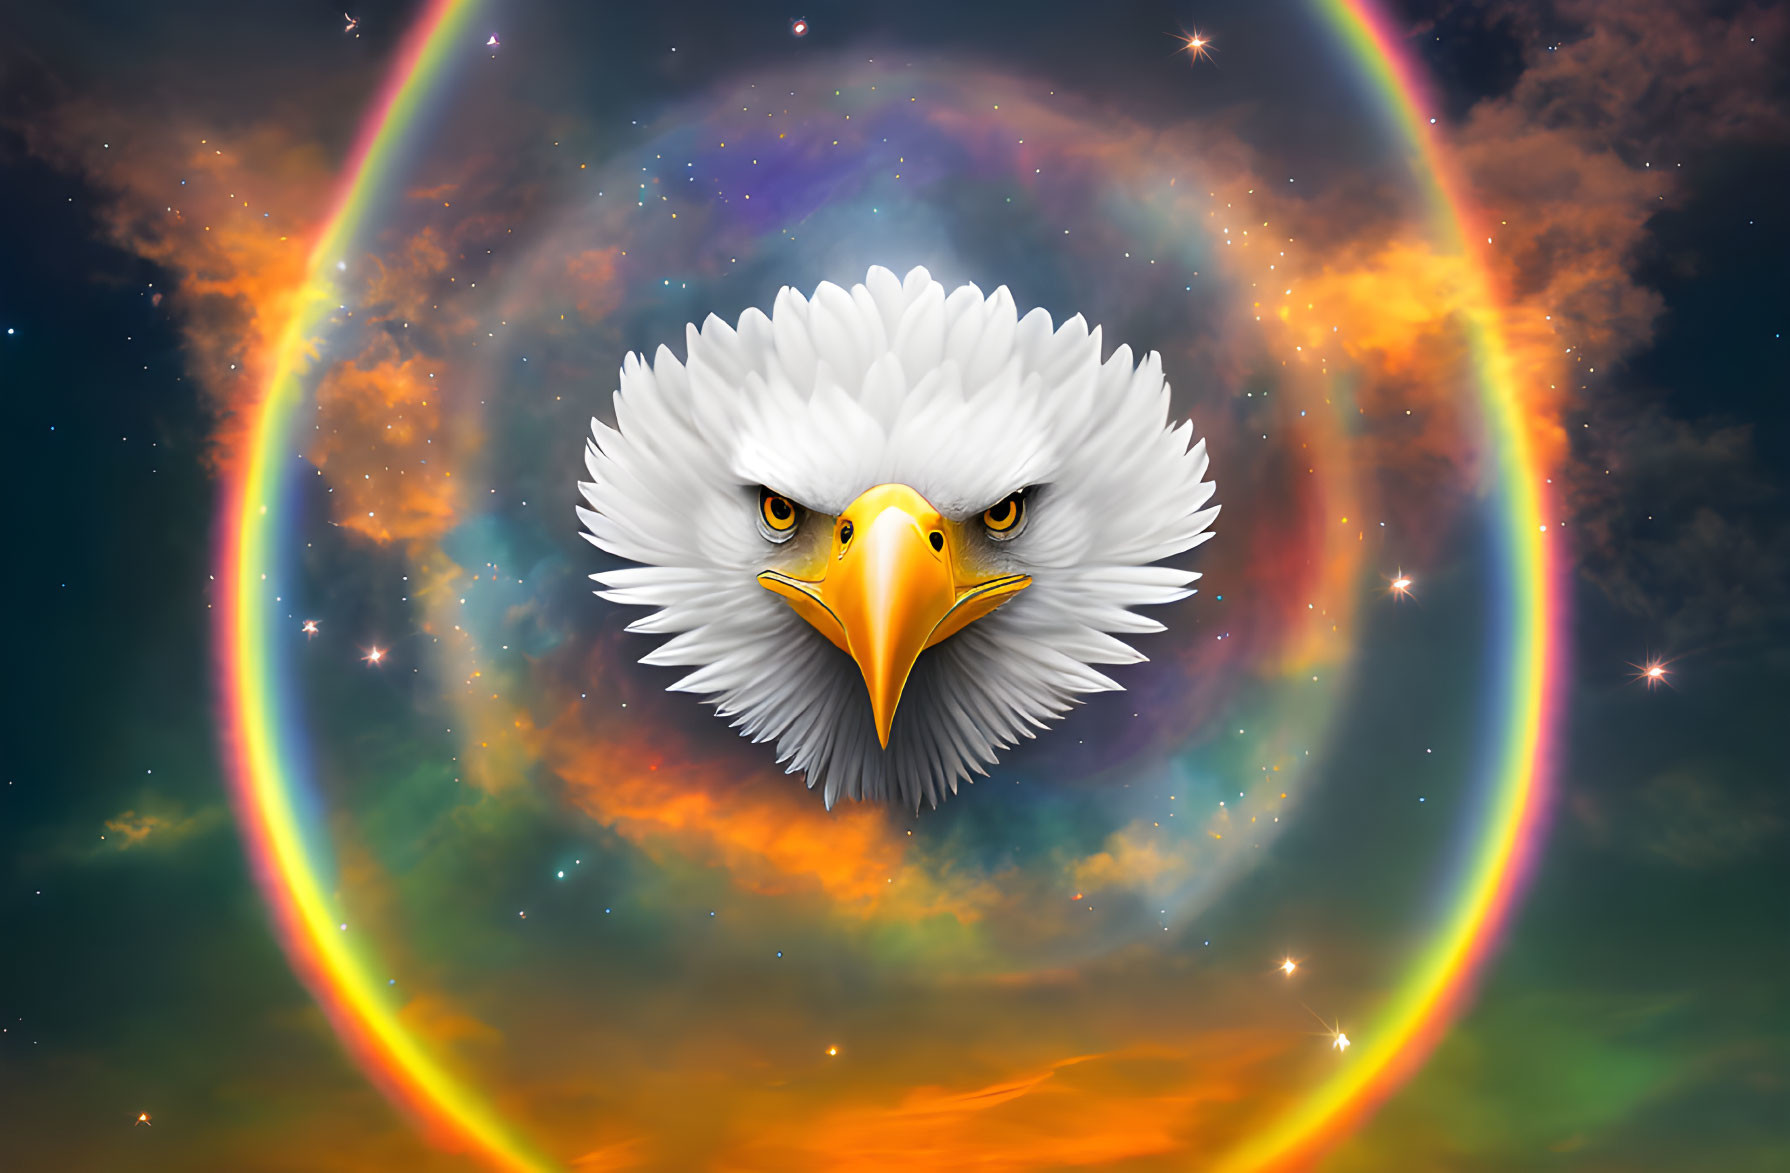 Bald Eagle's Face on Celestial Background with Rainbow Halo